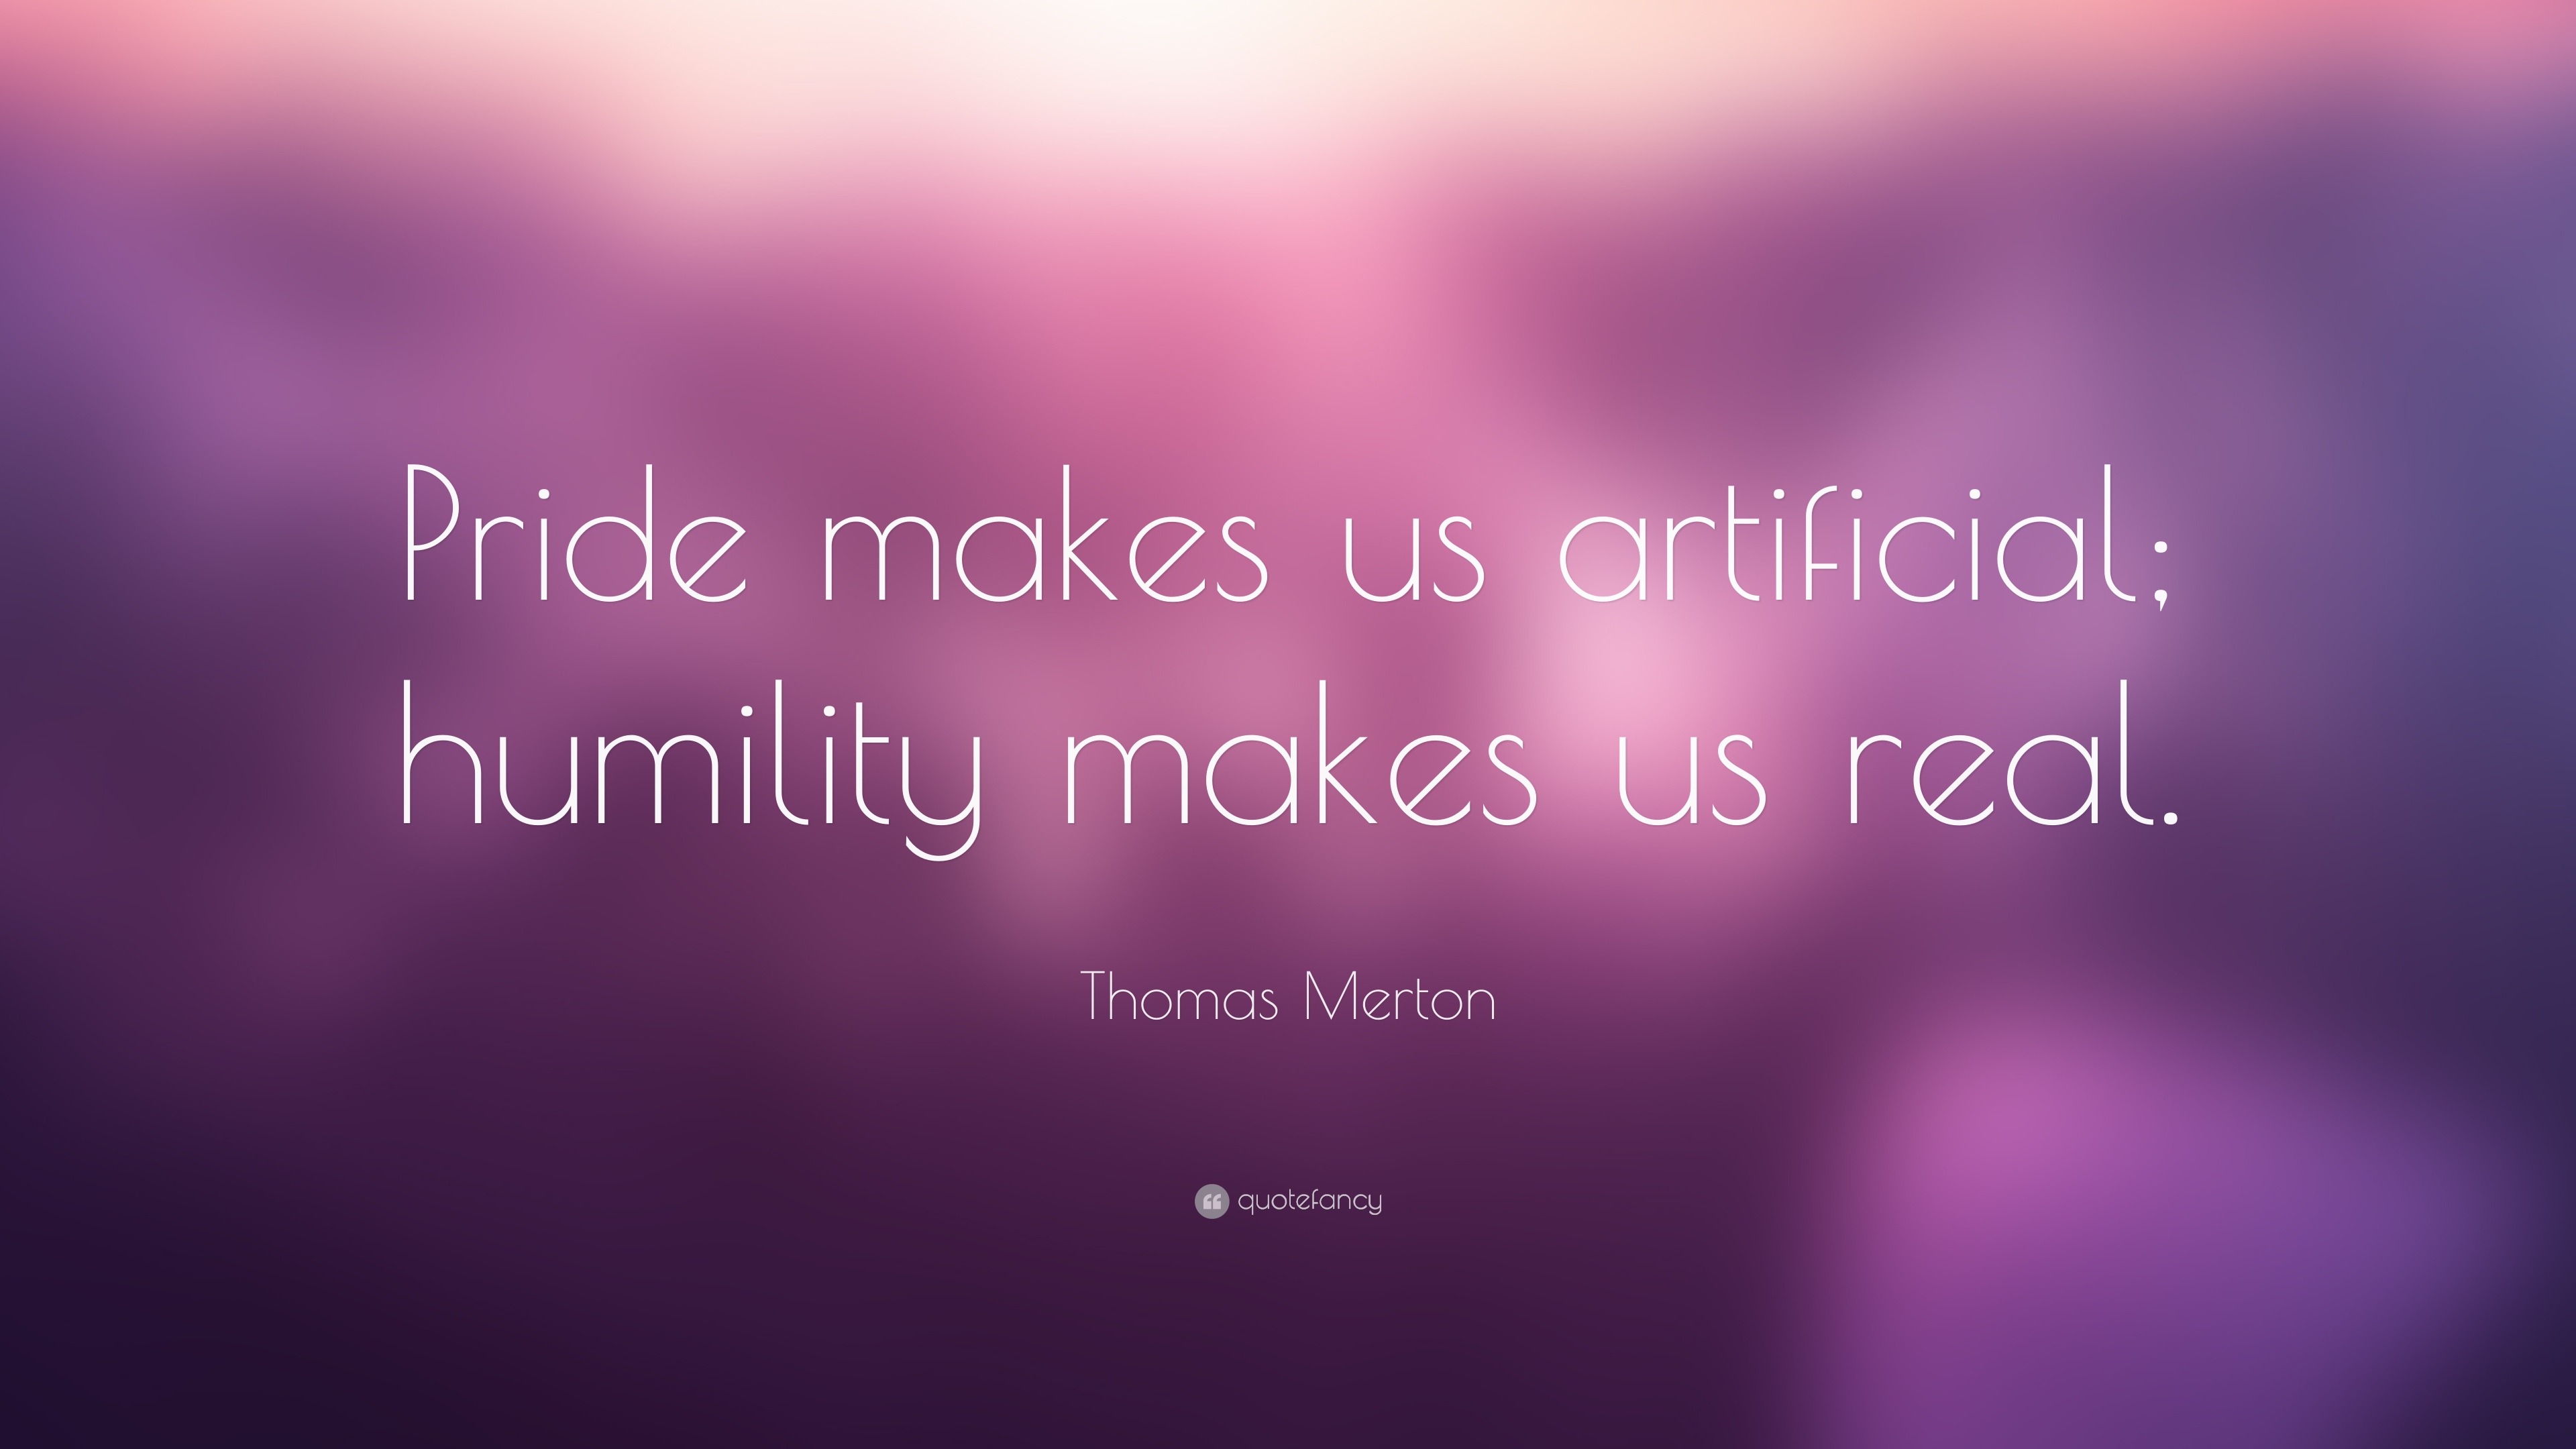 Thomas Merton Quote: “Pride makes us artificial; humility makes us real